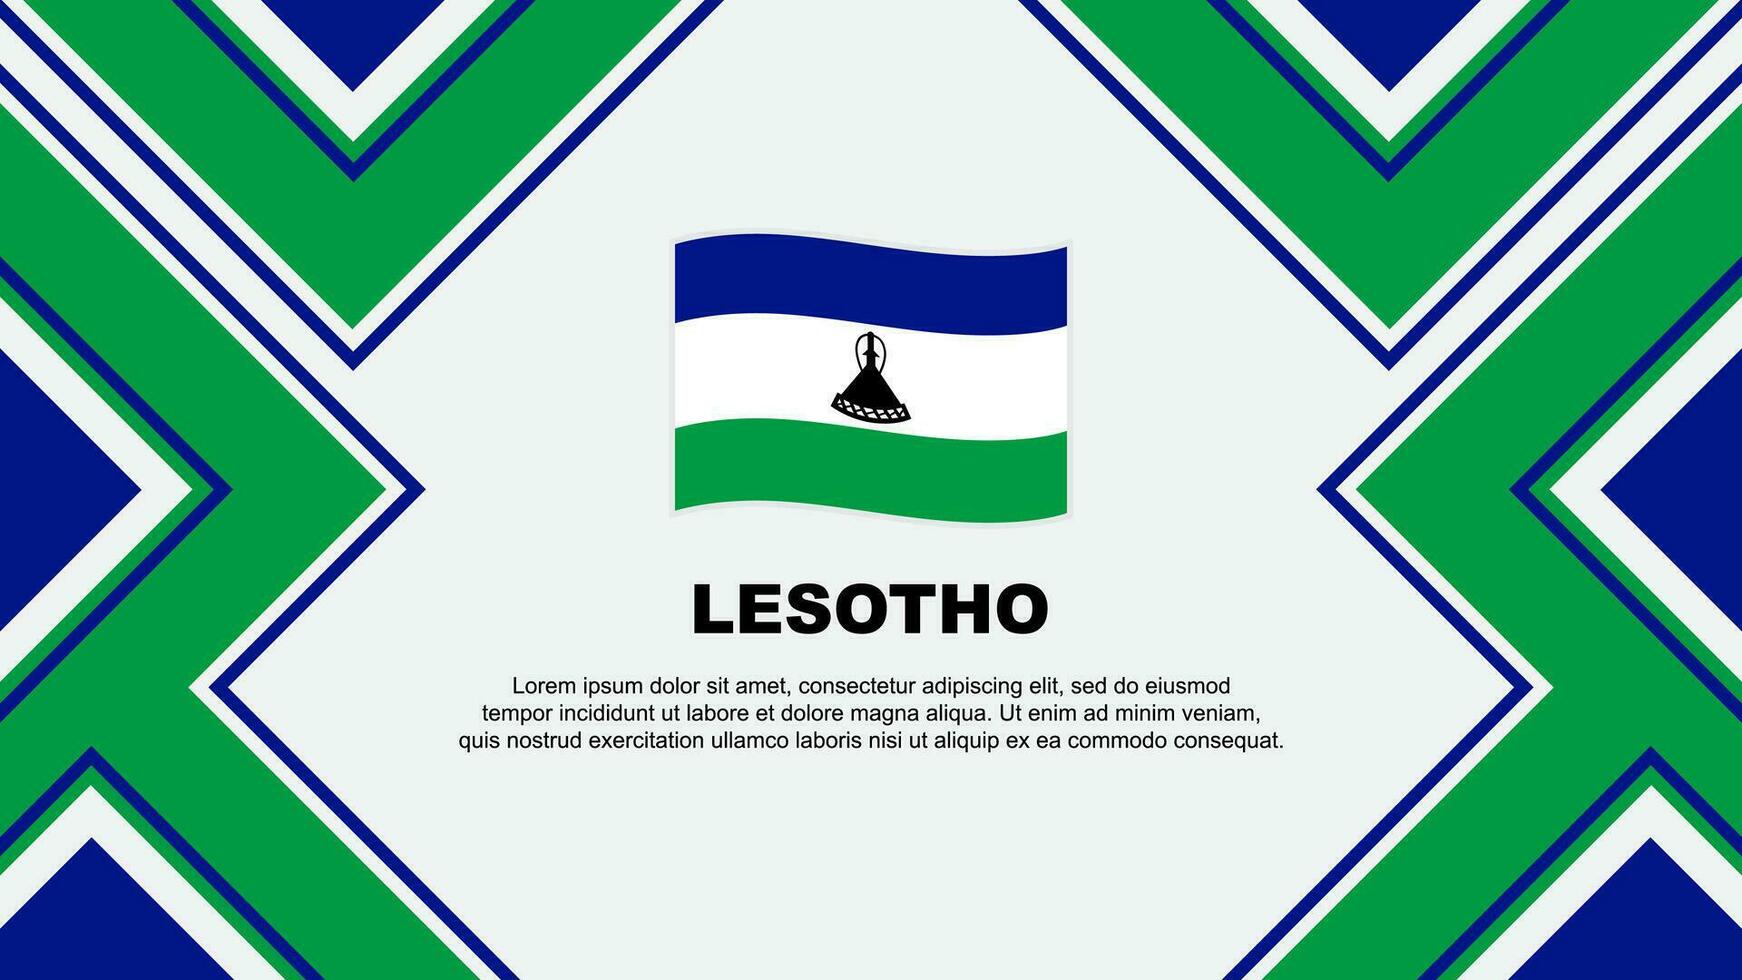 Lesotho Flagge abstrakt Hintergrund Design Vorlage. Lesotho Unabhängigkeit Tag Banner Hintergrund Vektor Illustration. Lesotho Vektor